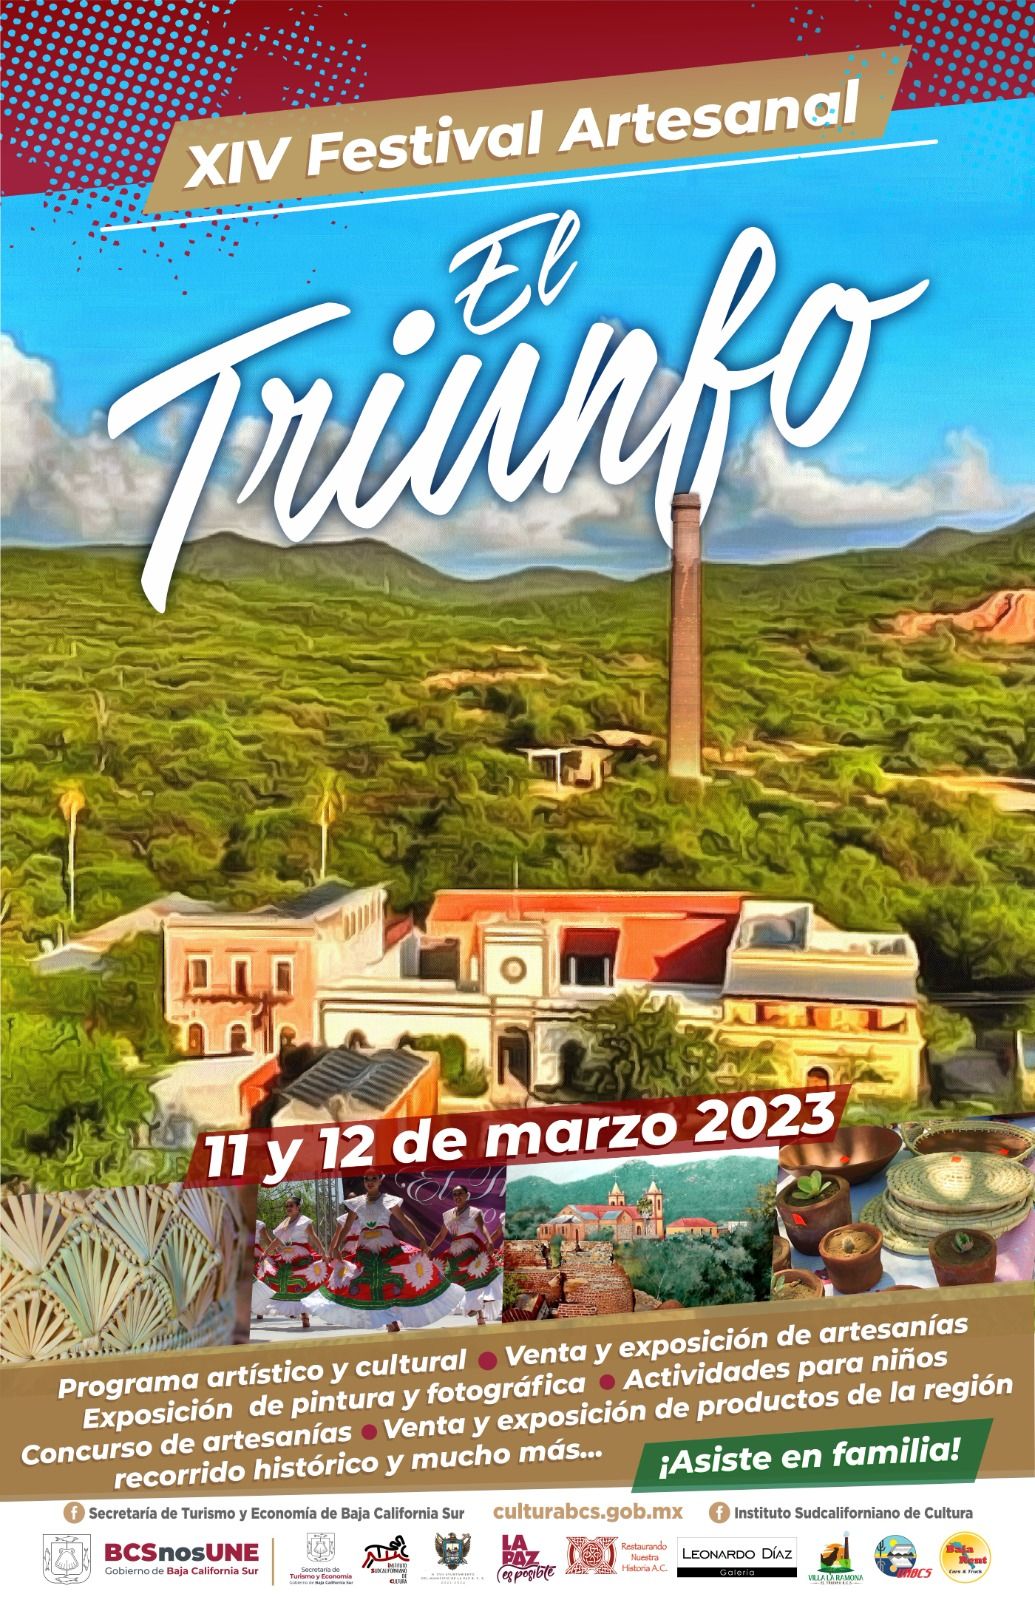 Invitan al XIV Festival Artesanal de El Triunfo